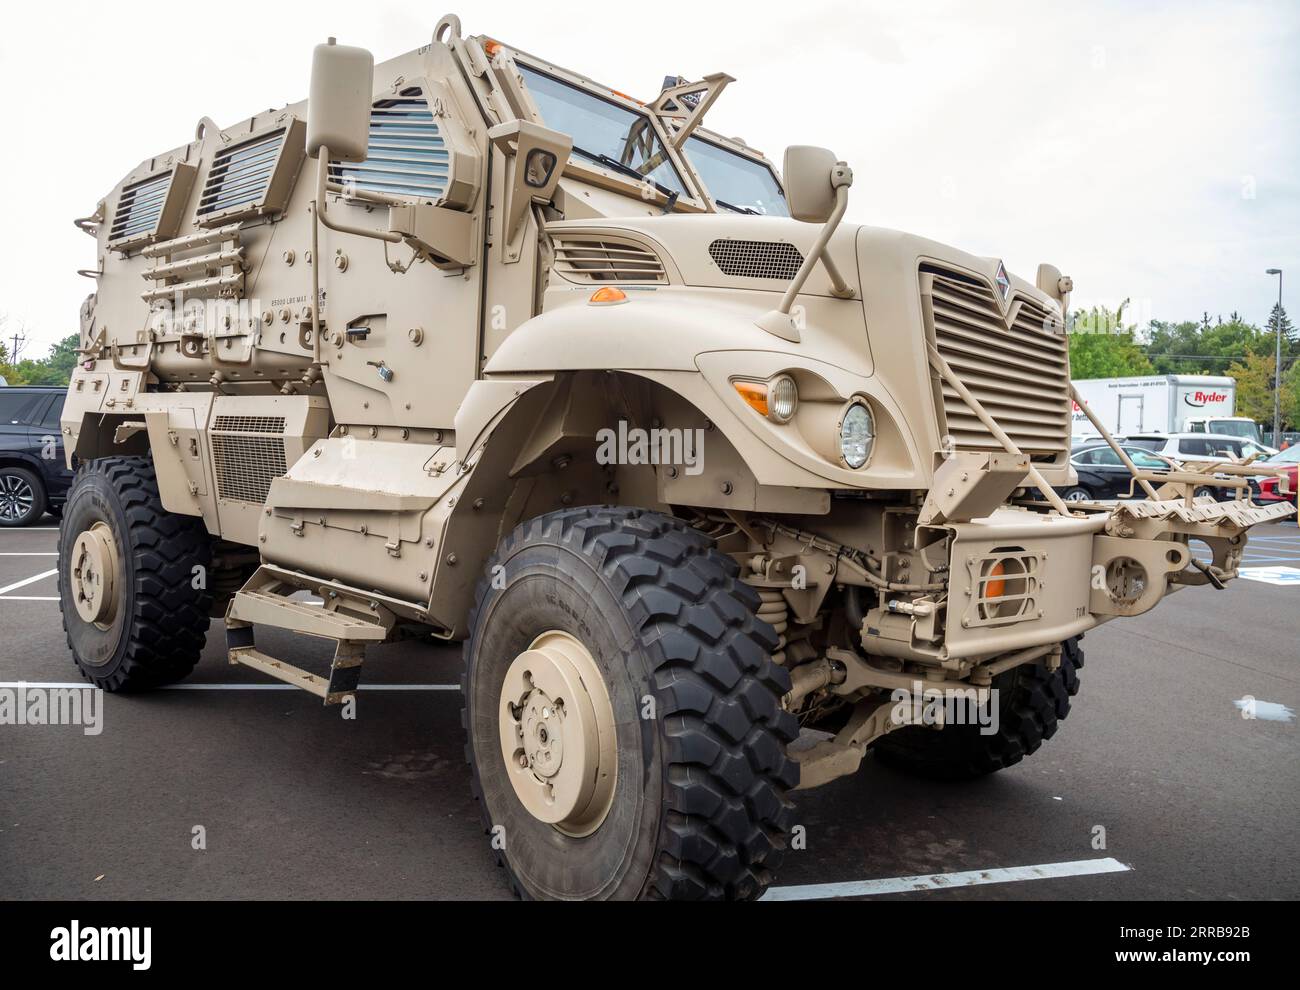 Novi, Michigan – Militärunternehmen disiplay Weapes for the U.S. Army beim Ground Vehicle Systems Engineering & Technology Symposium (GVSETS). Na Stockfoto